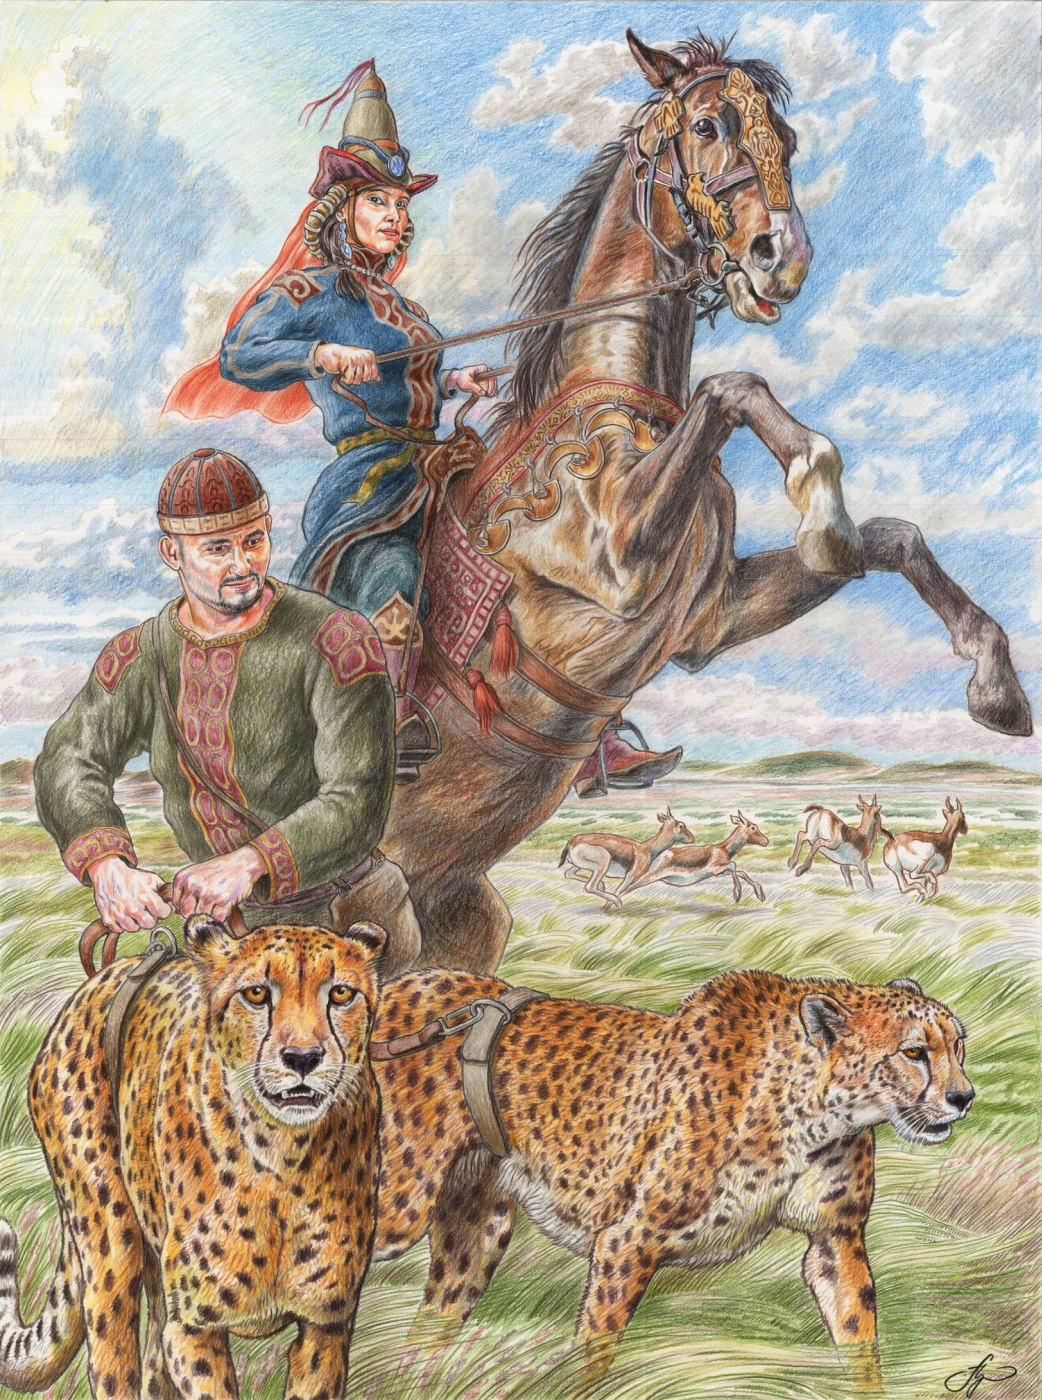 Anton Valerievich Shkurko. "The Kipchak Princess. Hunting with Cheetahs"